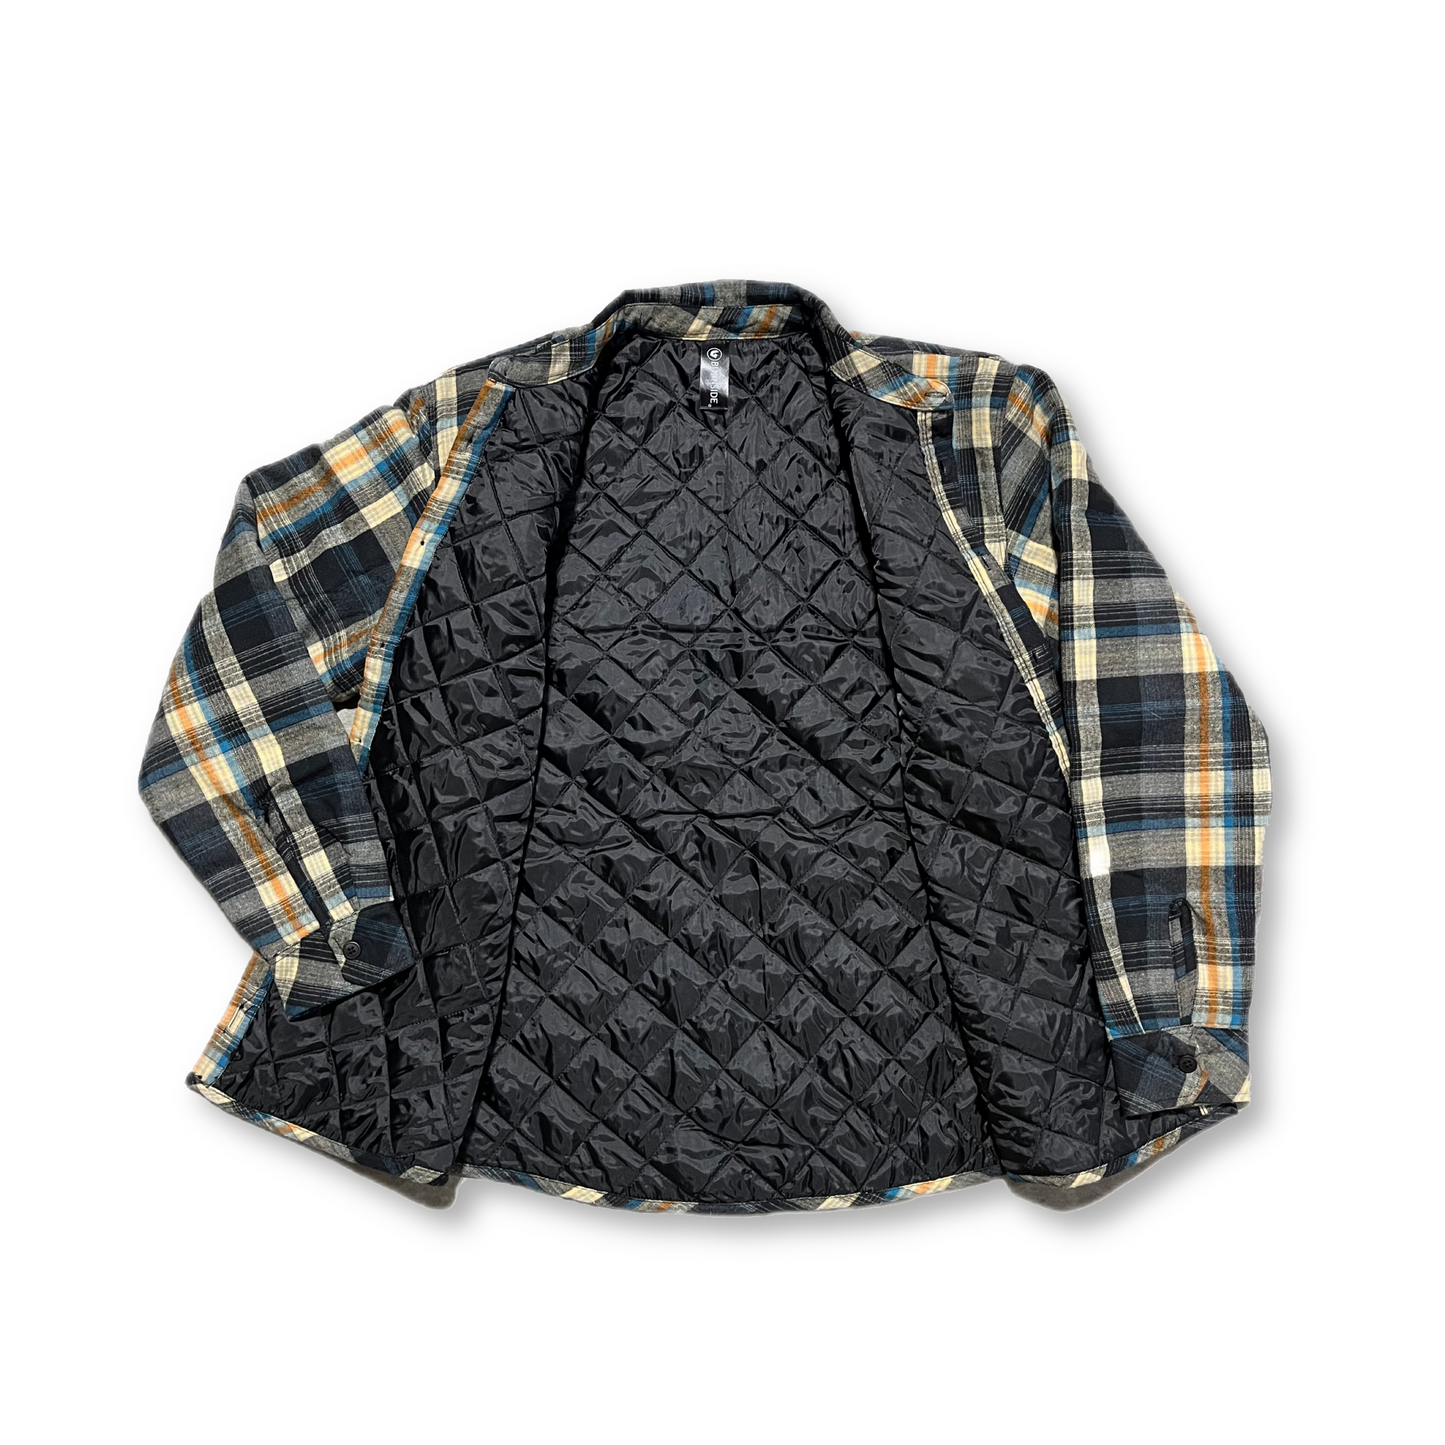 The Farmhouse Flannel Jacket